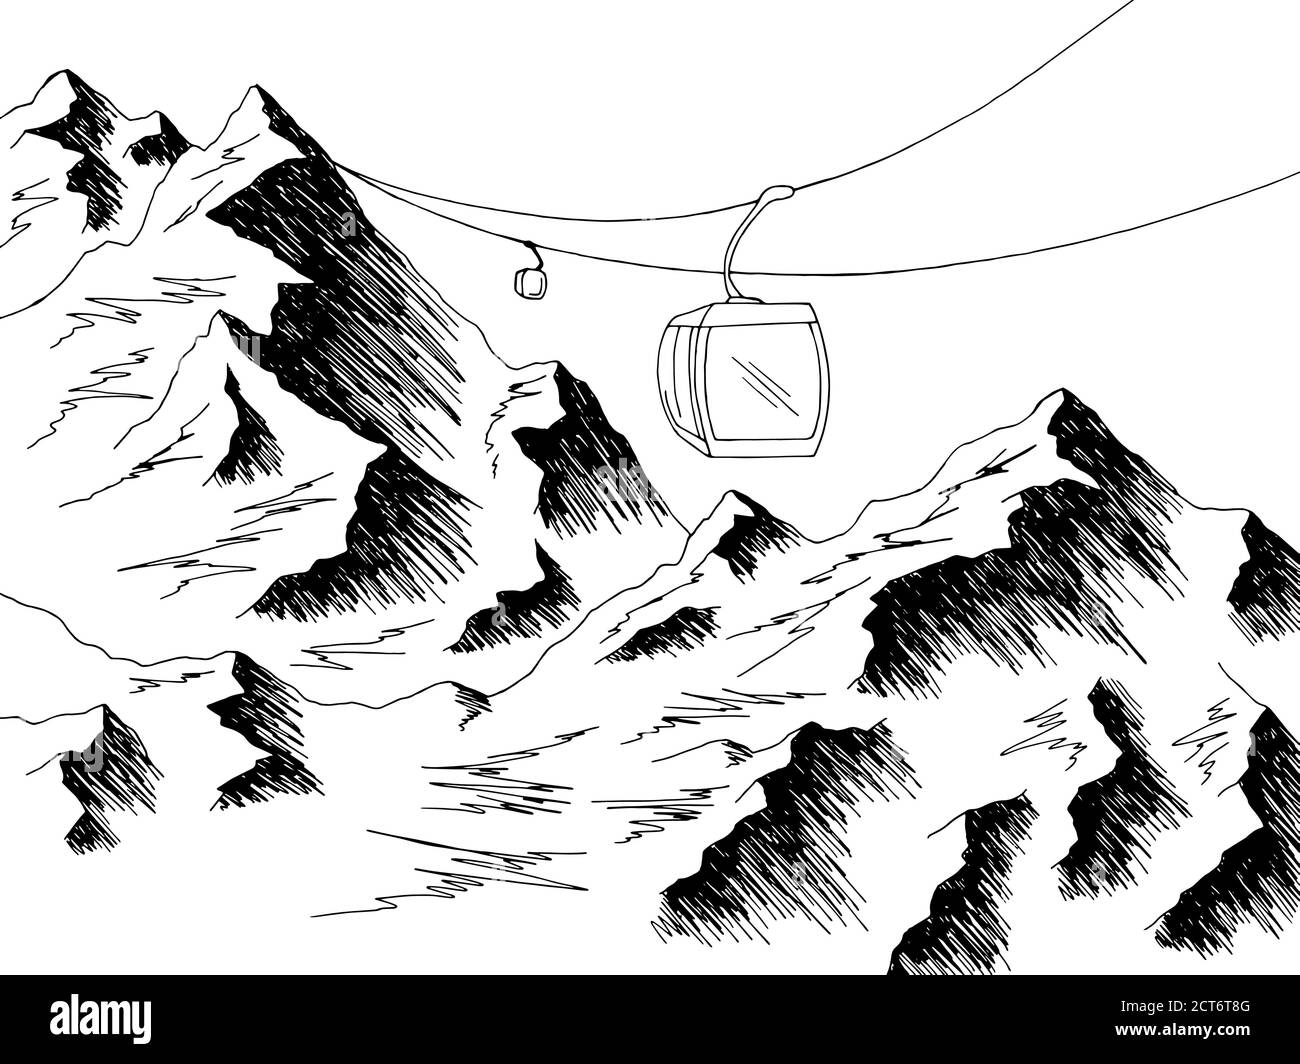 Cable Car Grafik Berg schwarz weiß Landschaft Skizze Illustration Vektor Stock Vektor